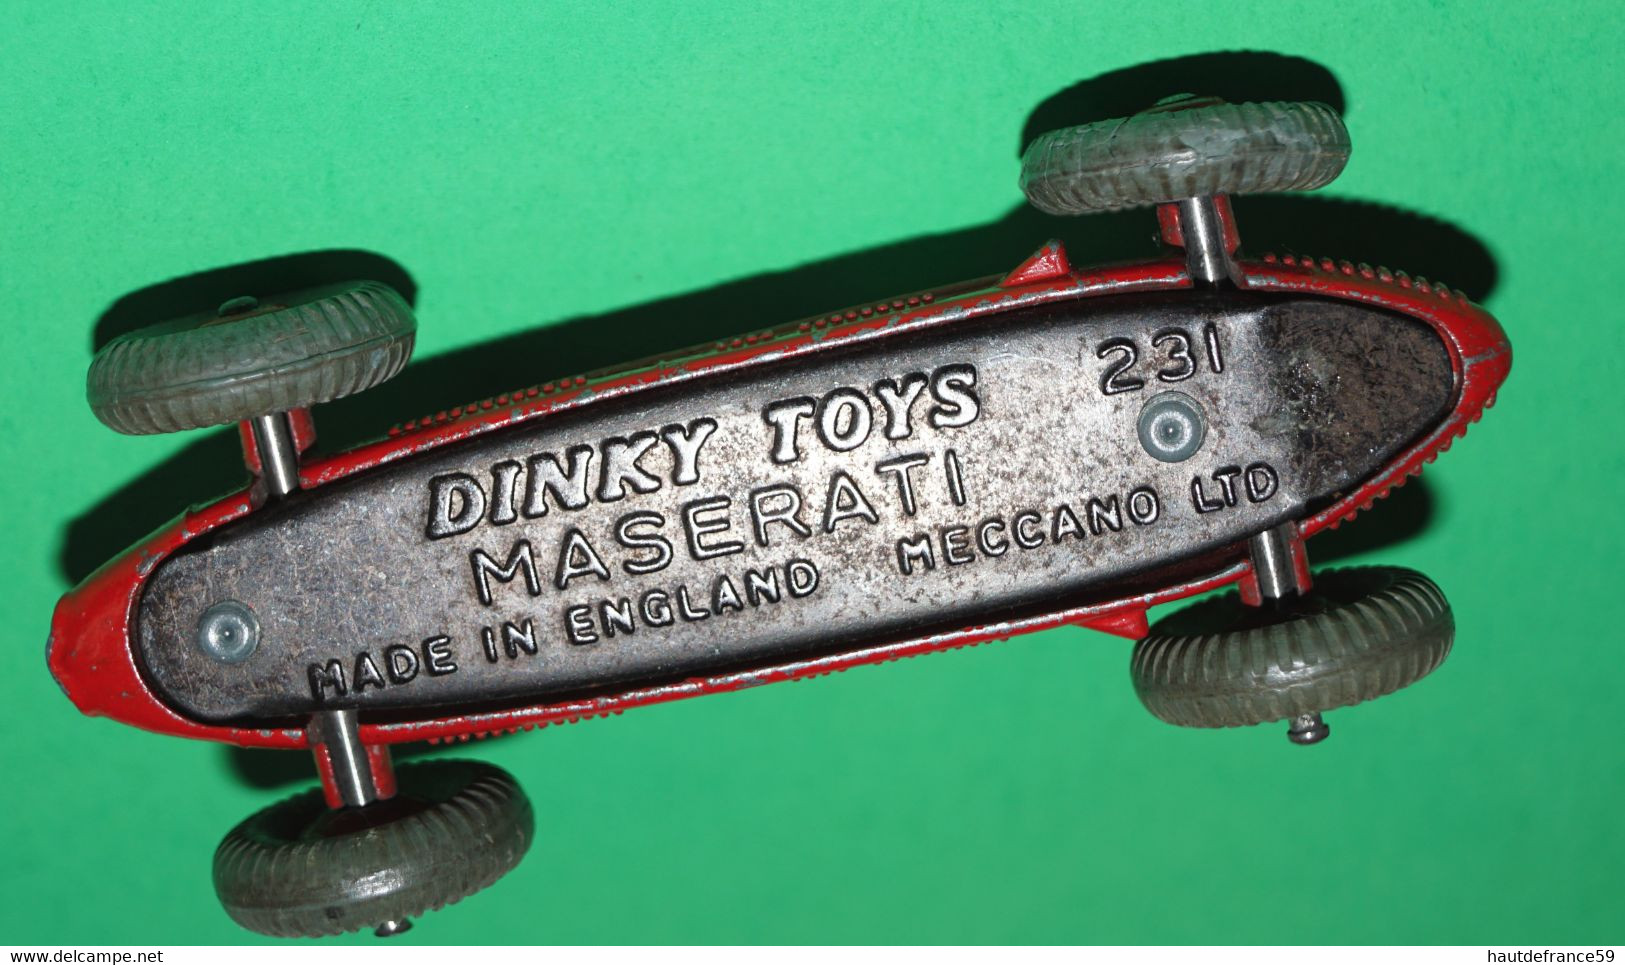 Original DINKY TOYS  MASERATI  Série Rare 231 -  Made In England Meccano LTD - Collectors & Unusuals - All Brands